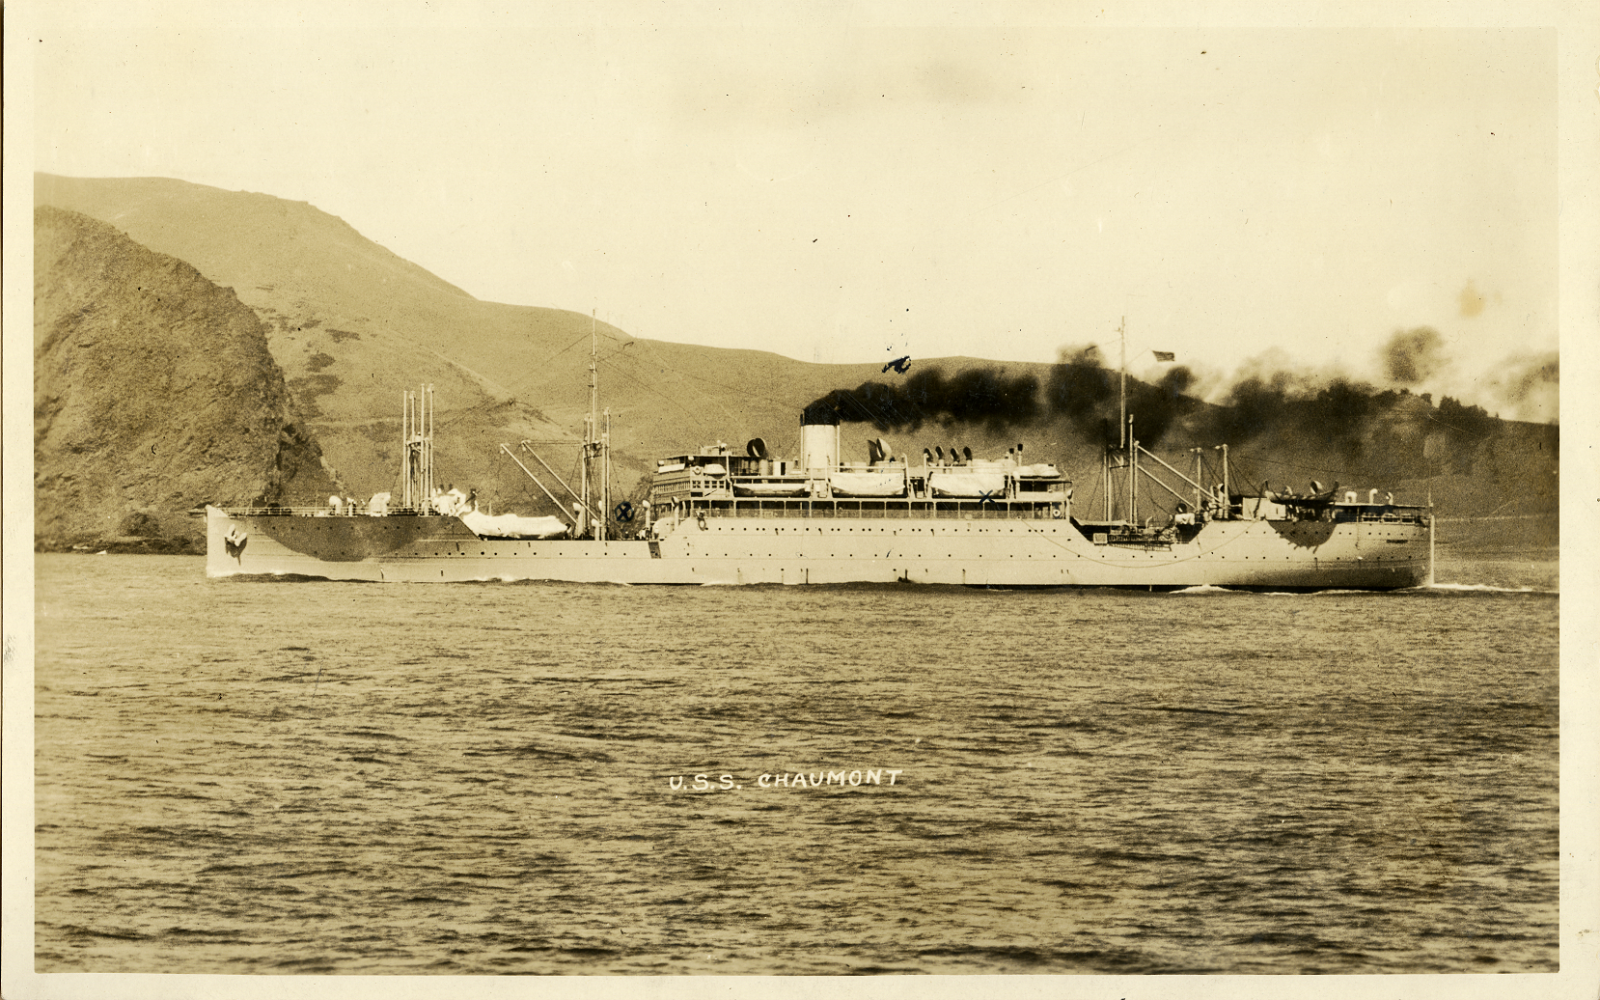 USS Chaumont